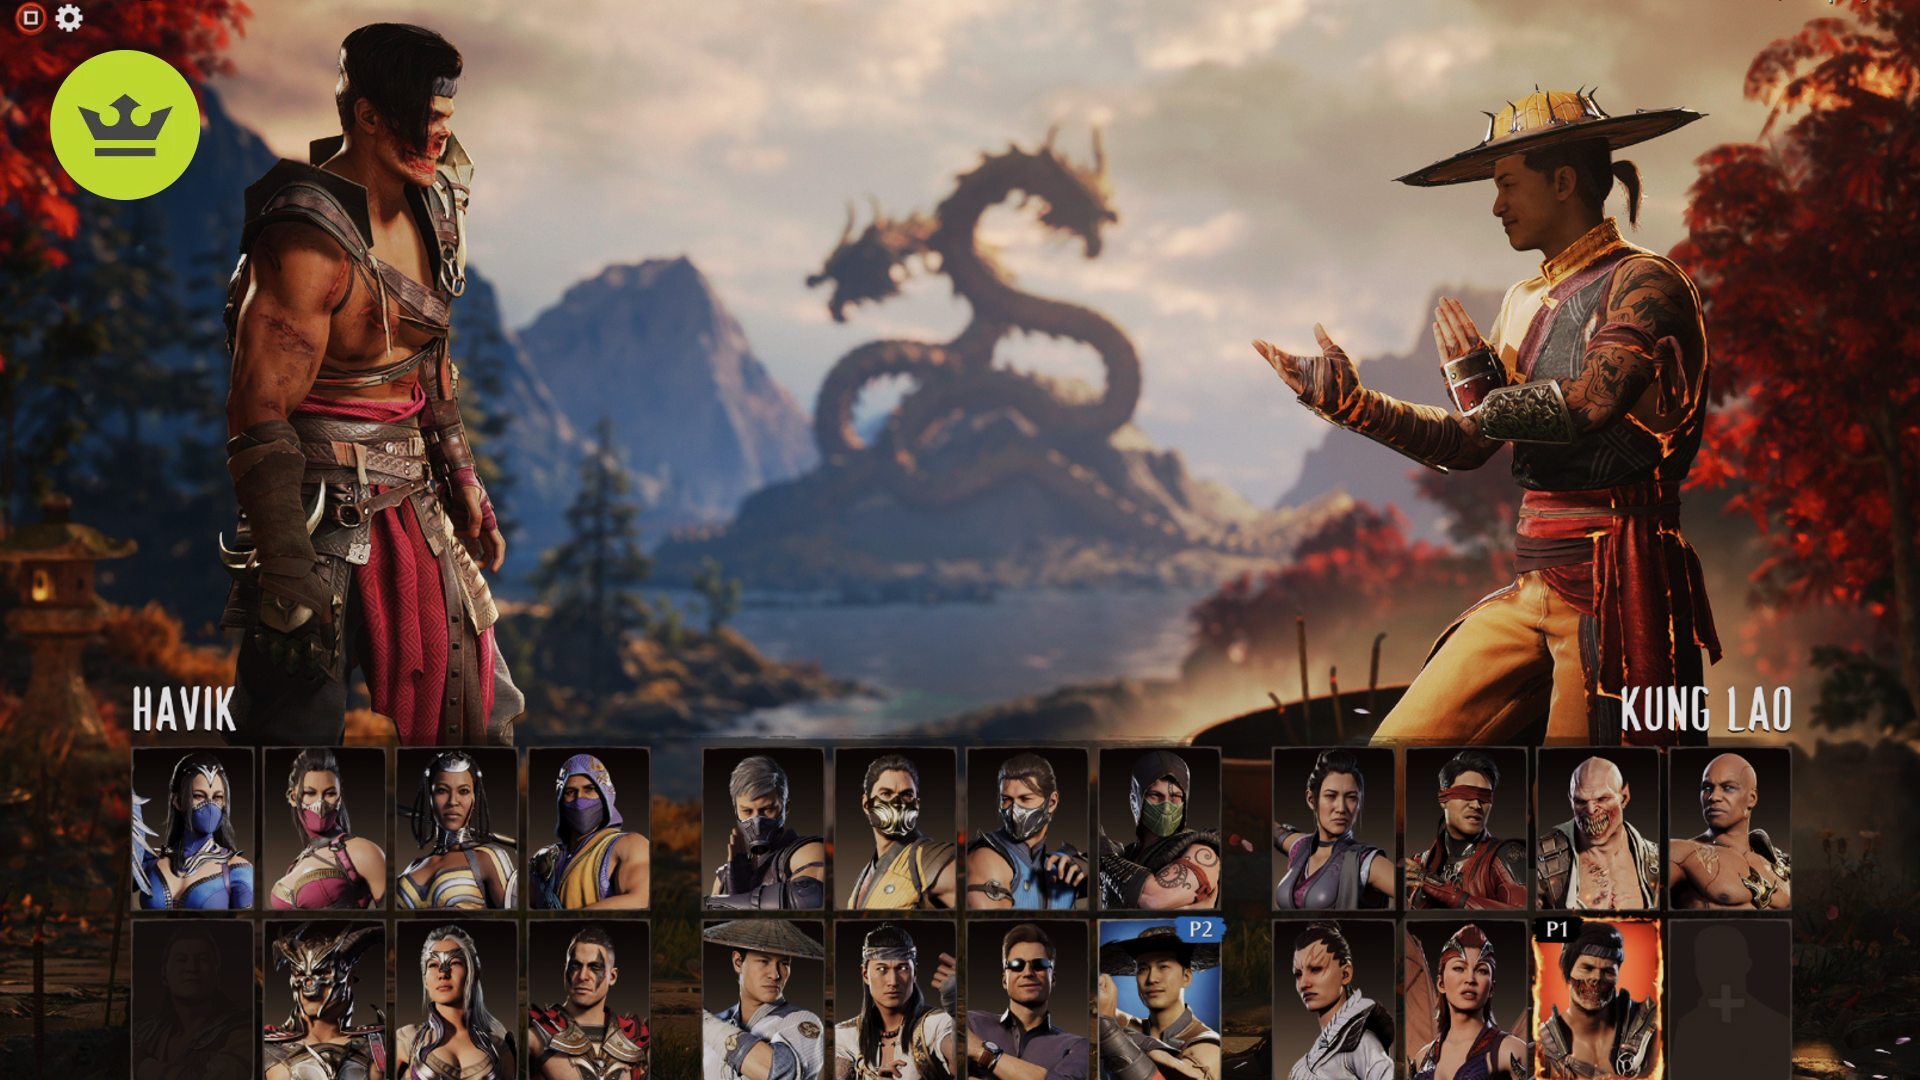 Mortal Kombat 1 Review Roundup - GameSpot